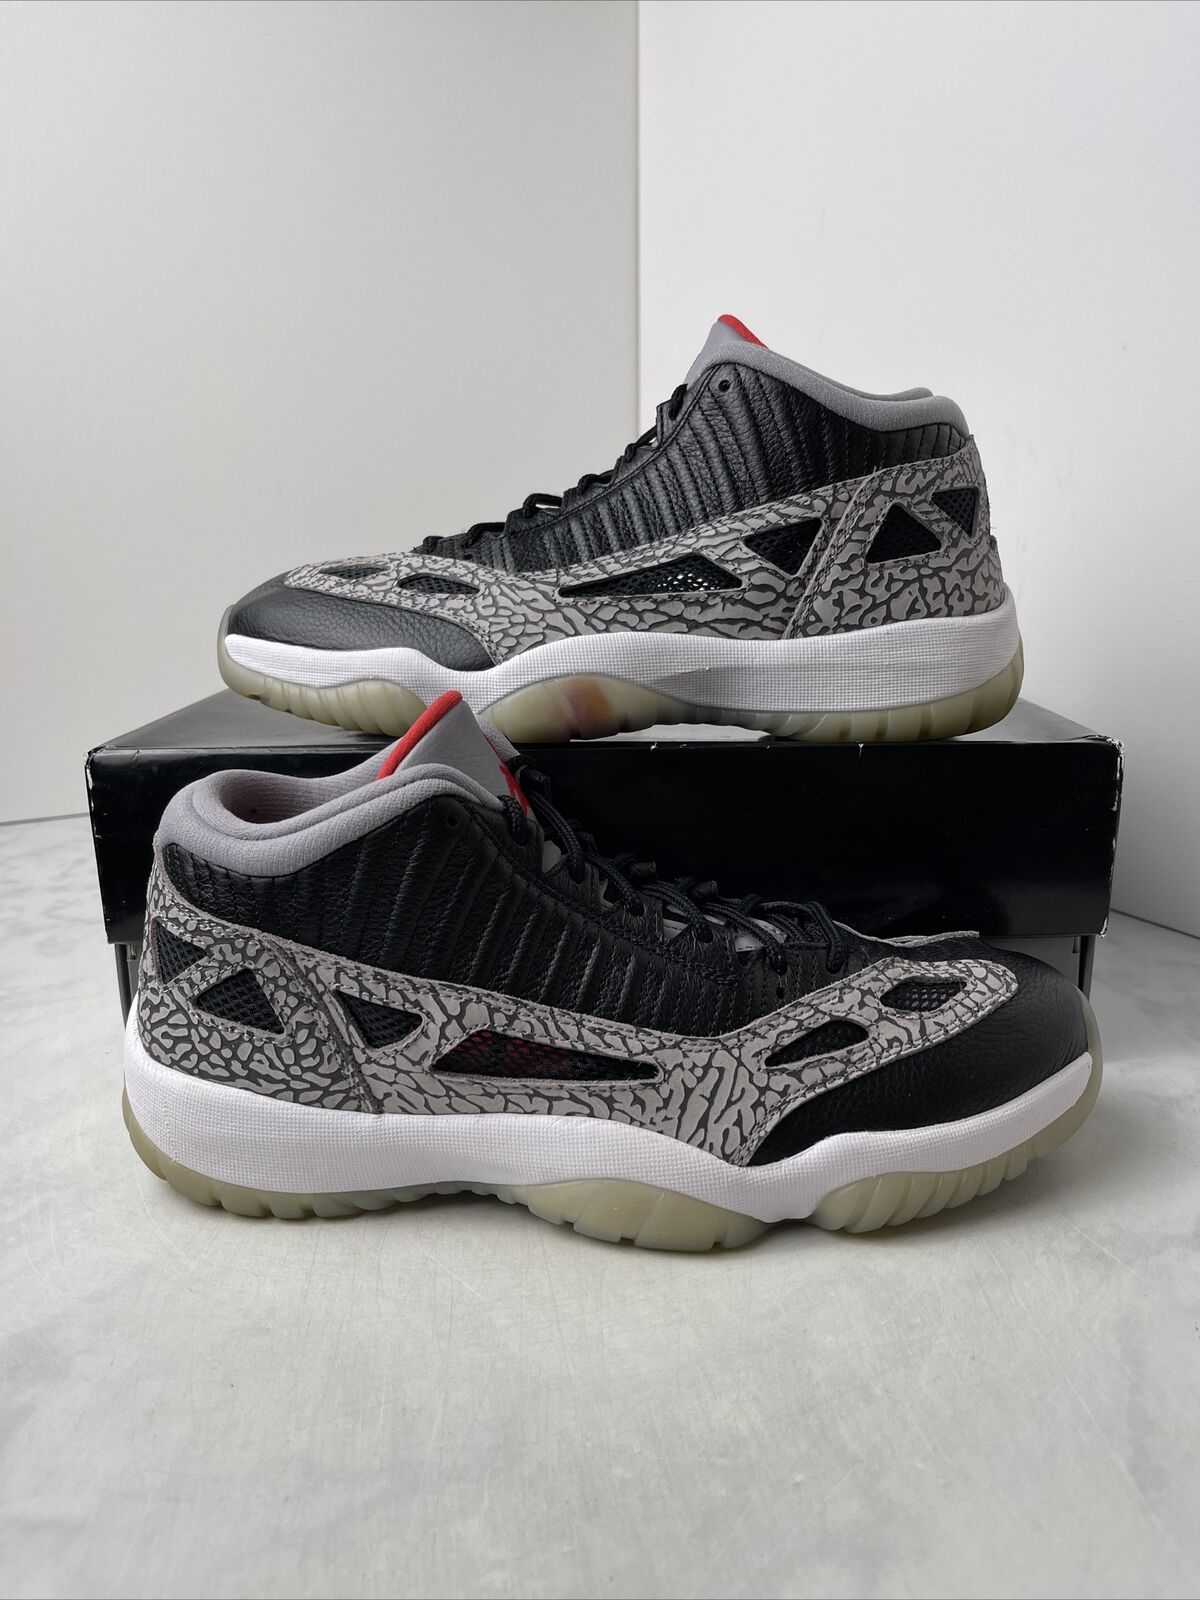 Nike Air Jordan 11 Retro Low IE Black Cement size 11.5 OG XI 919712?006 Black?